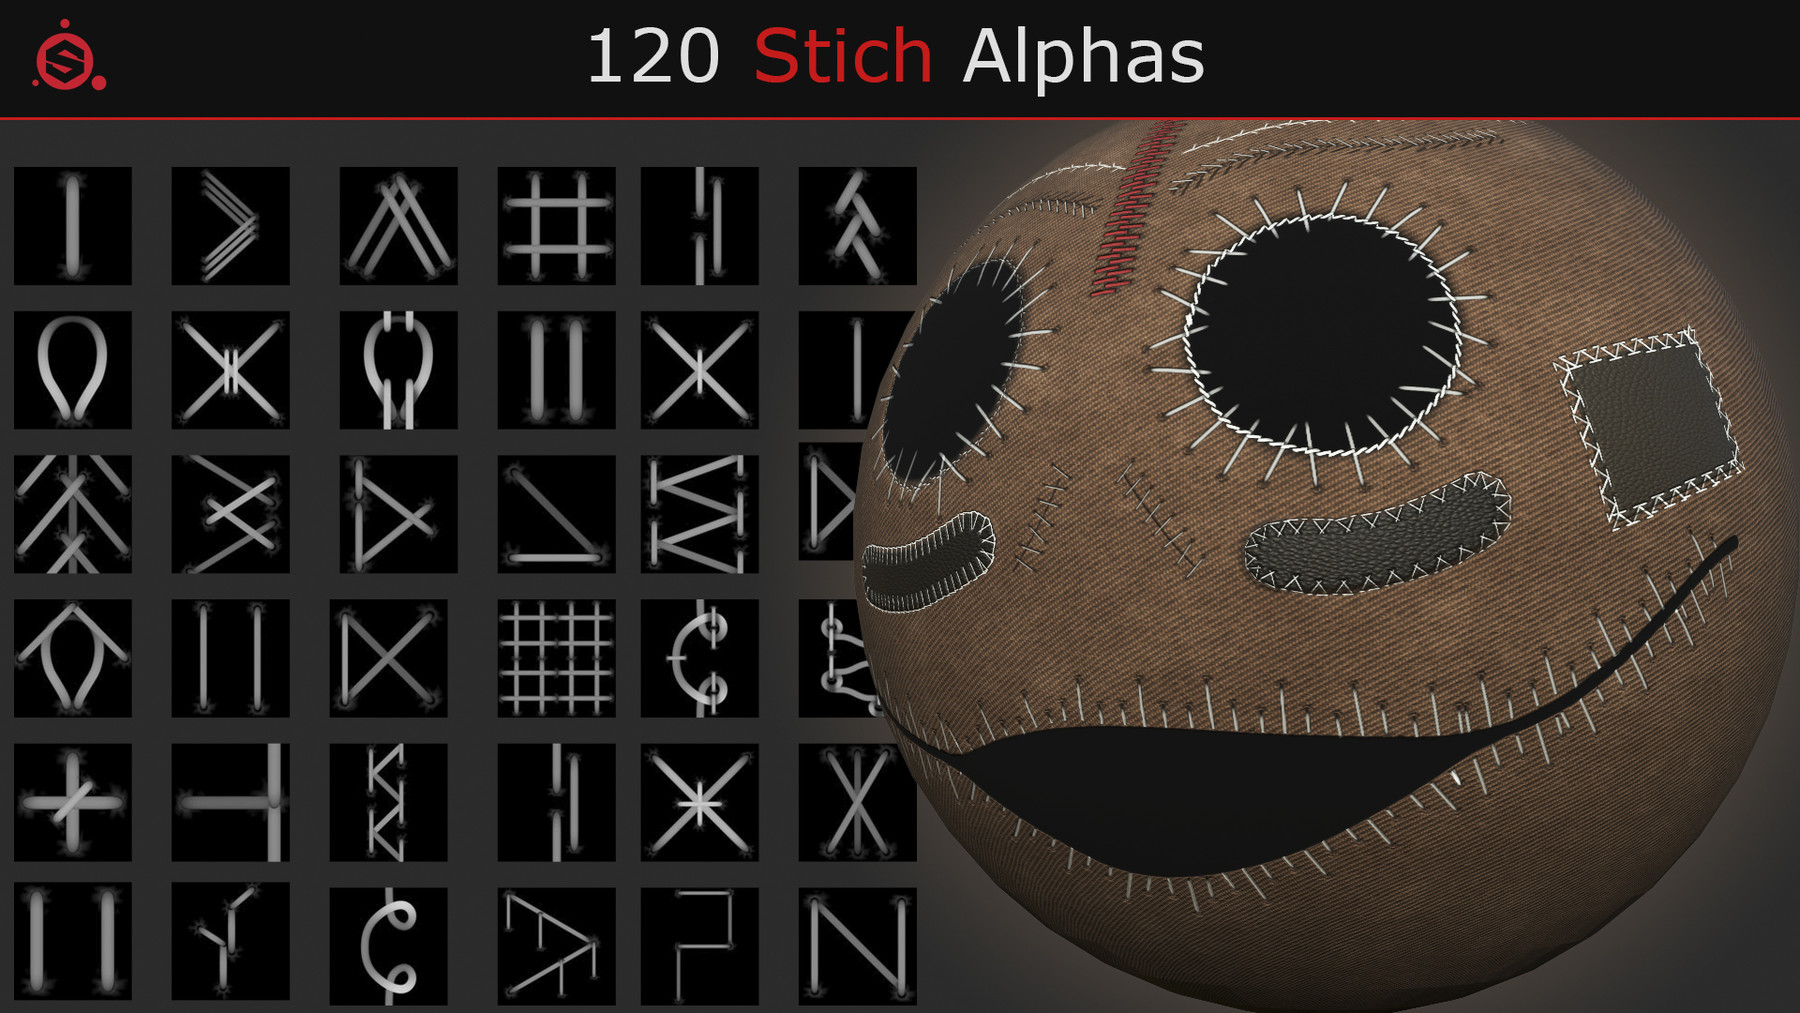 zbrush alphas stitch